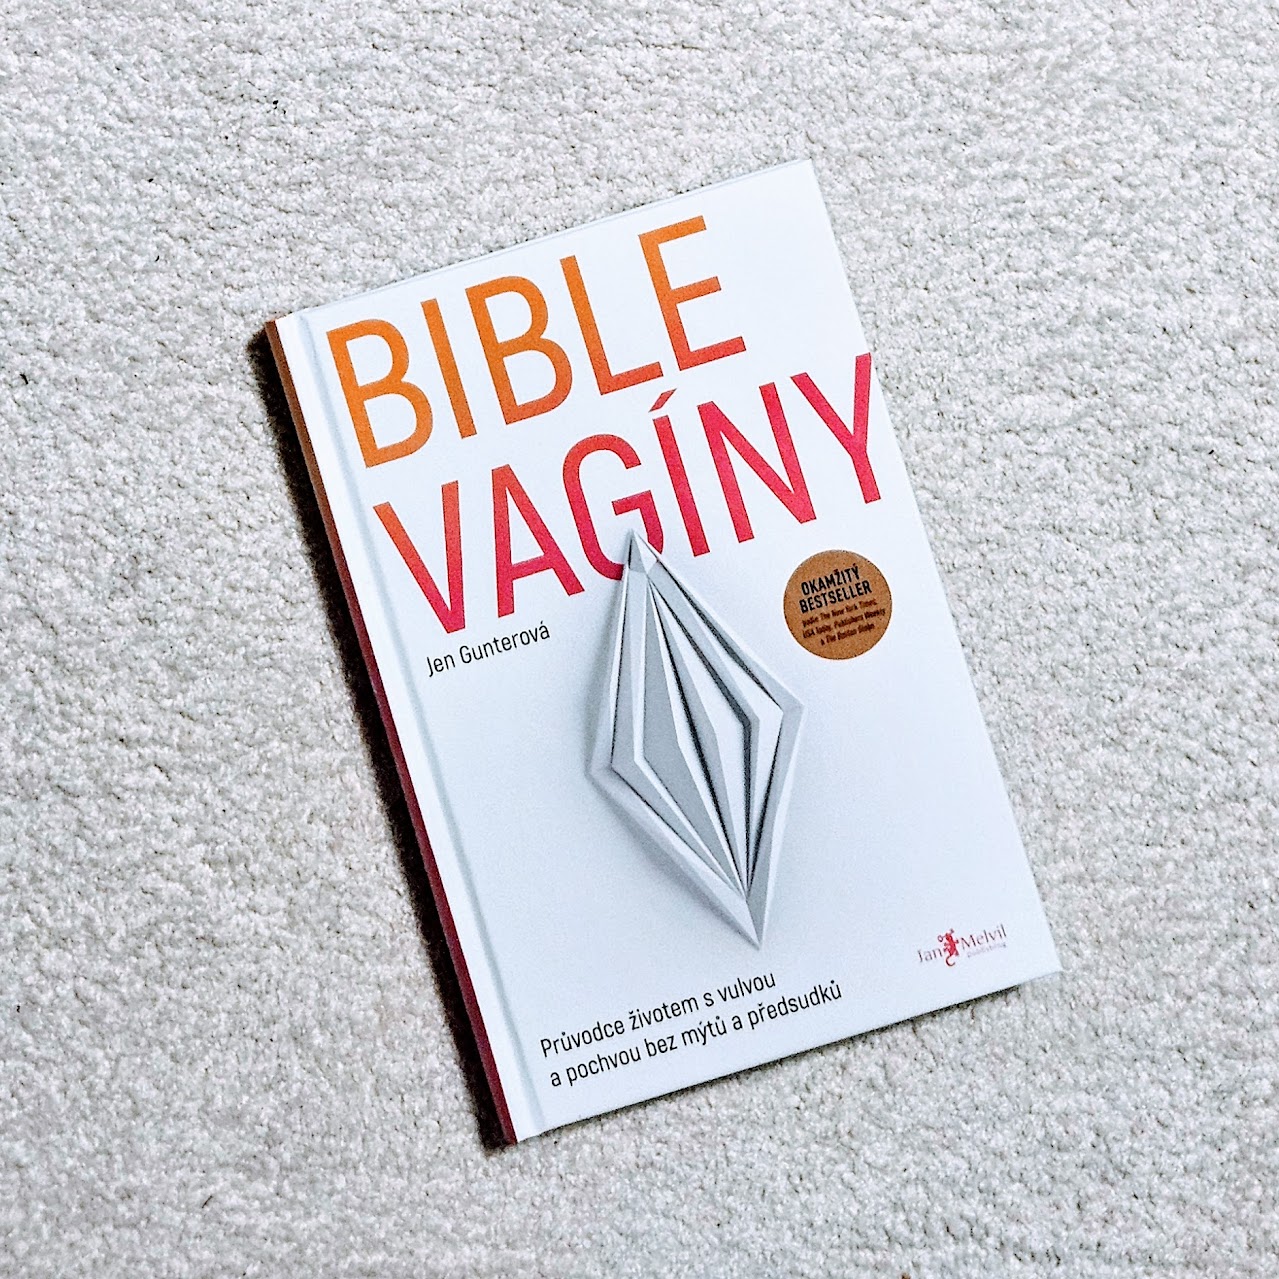 Bible vagíny (The Vagina Bible) - Jen Gunter